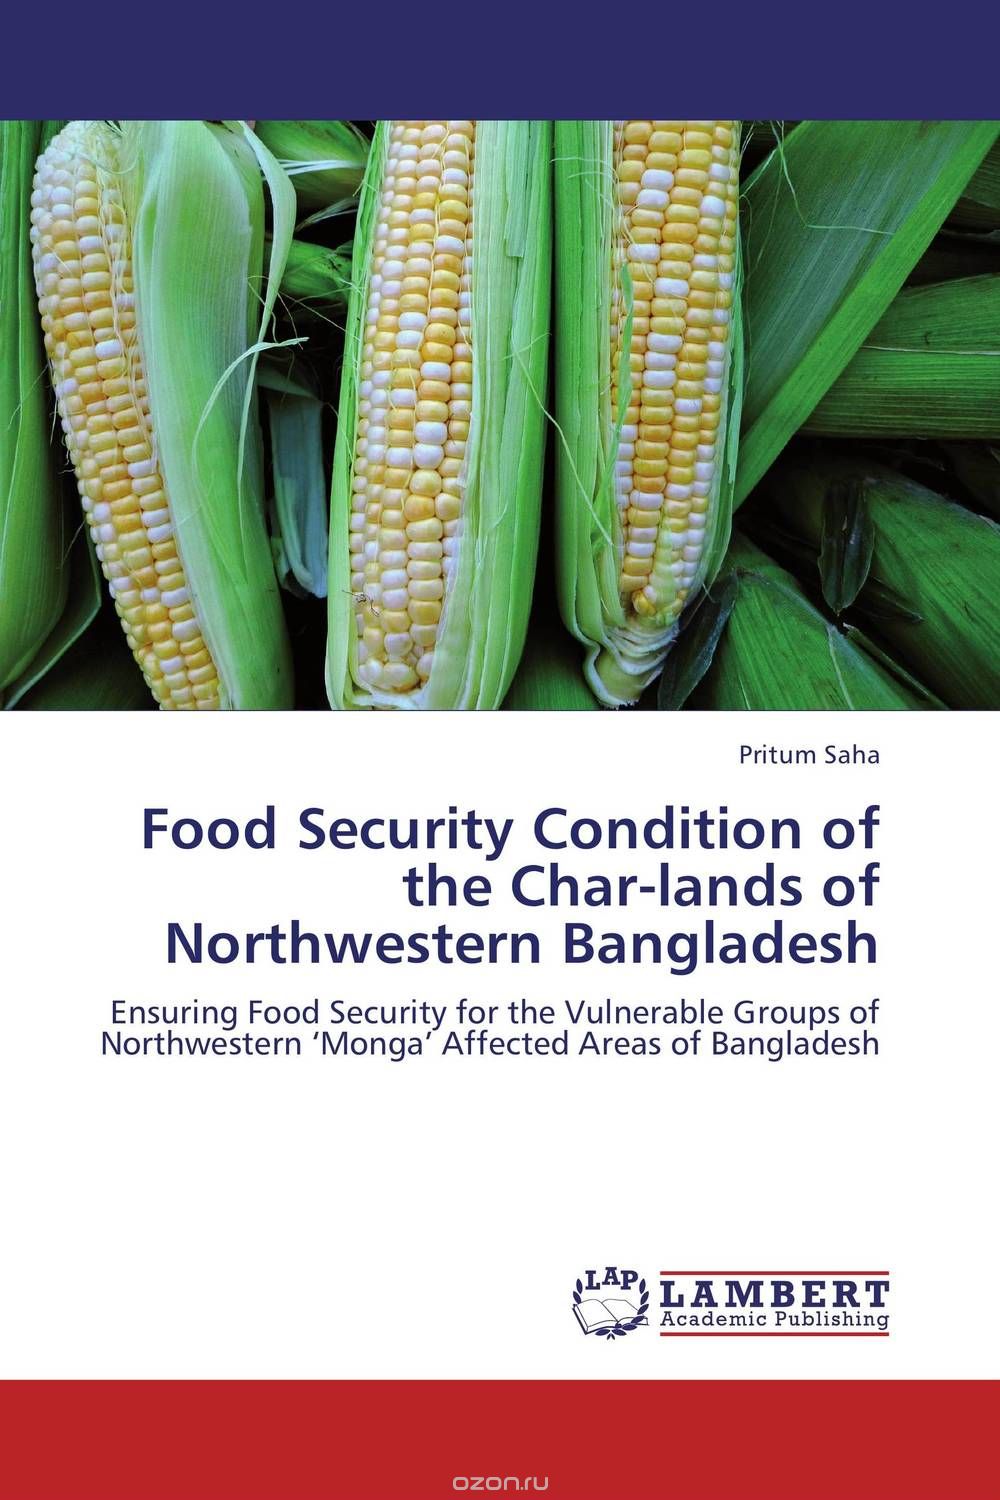 Скачать книгу "Food Security Condition of the Char-lands of Northwestern Bangladesh"